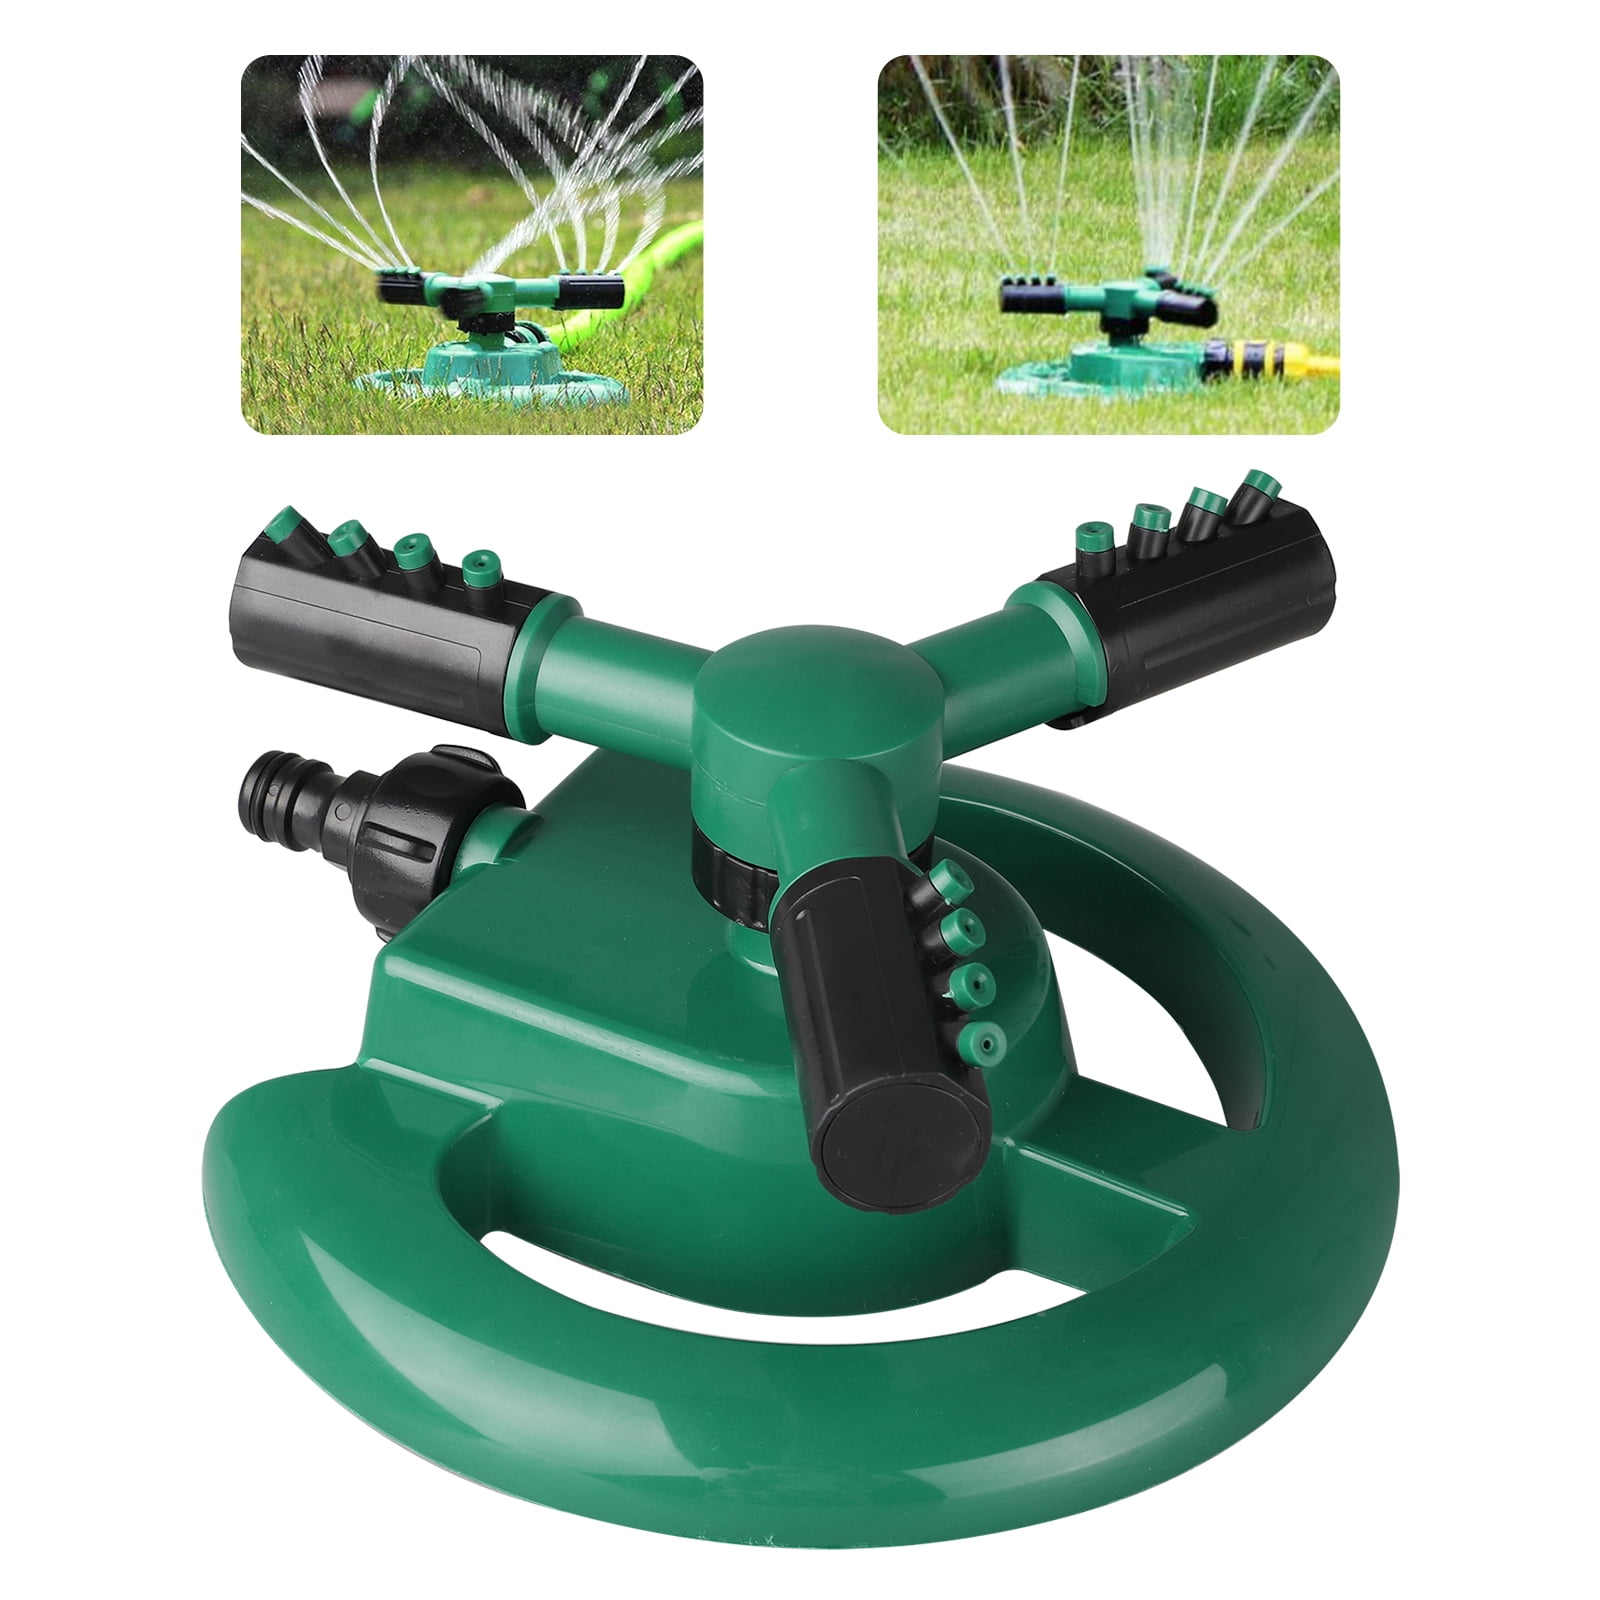 Details about   Turbine Sprinkler Lawn Garden Water Hose Impact Resistant Plastic Spike Head NEW 